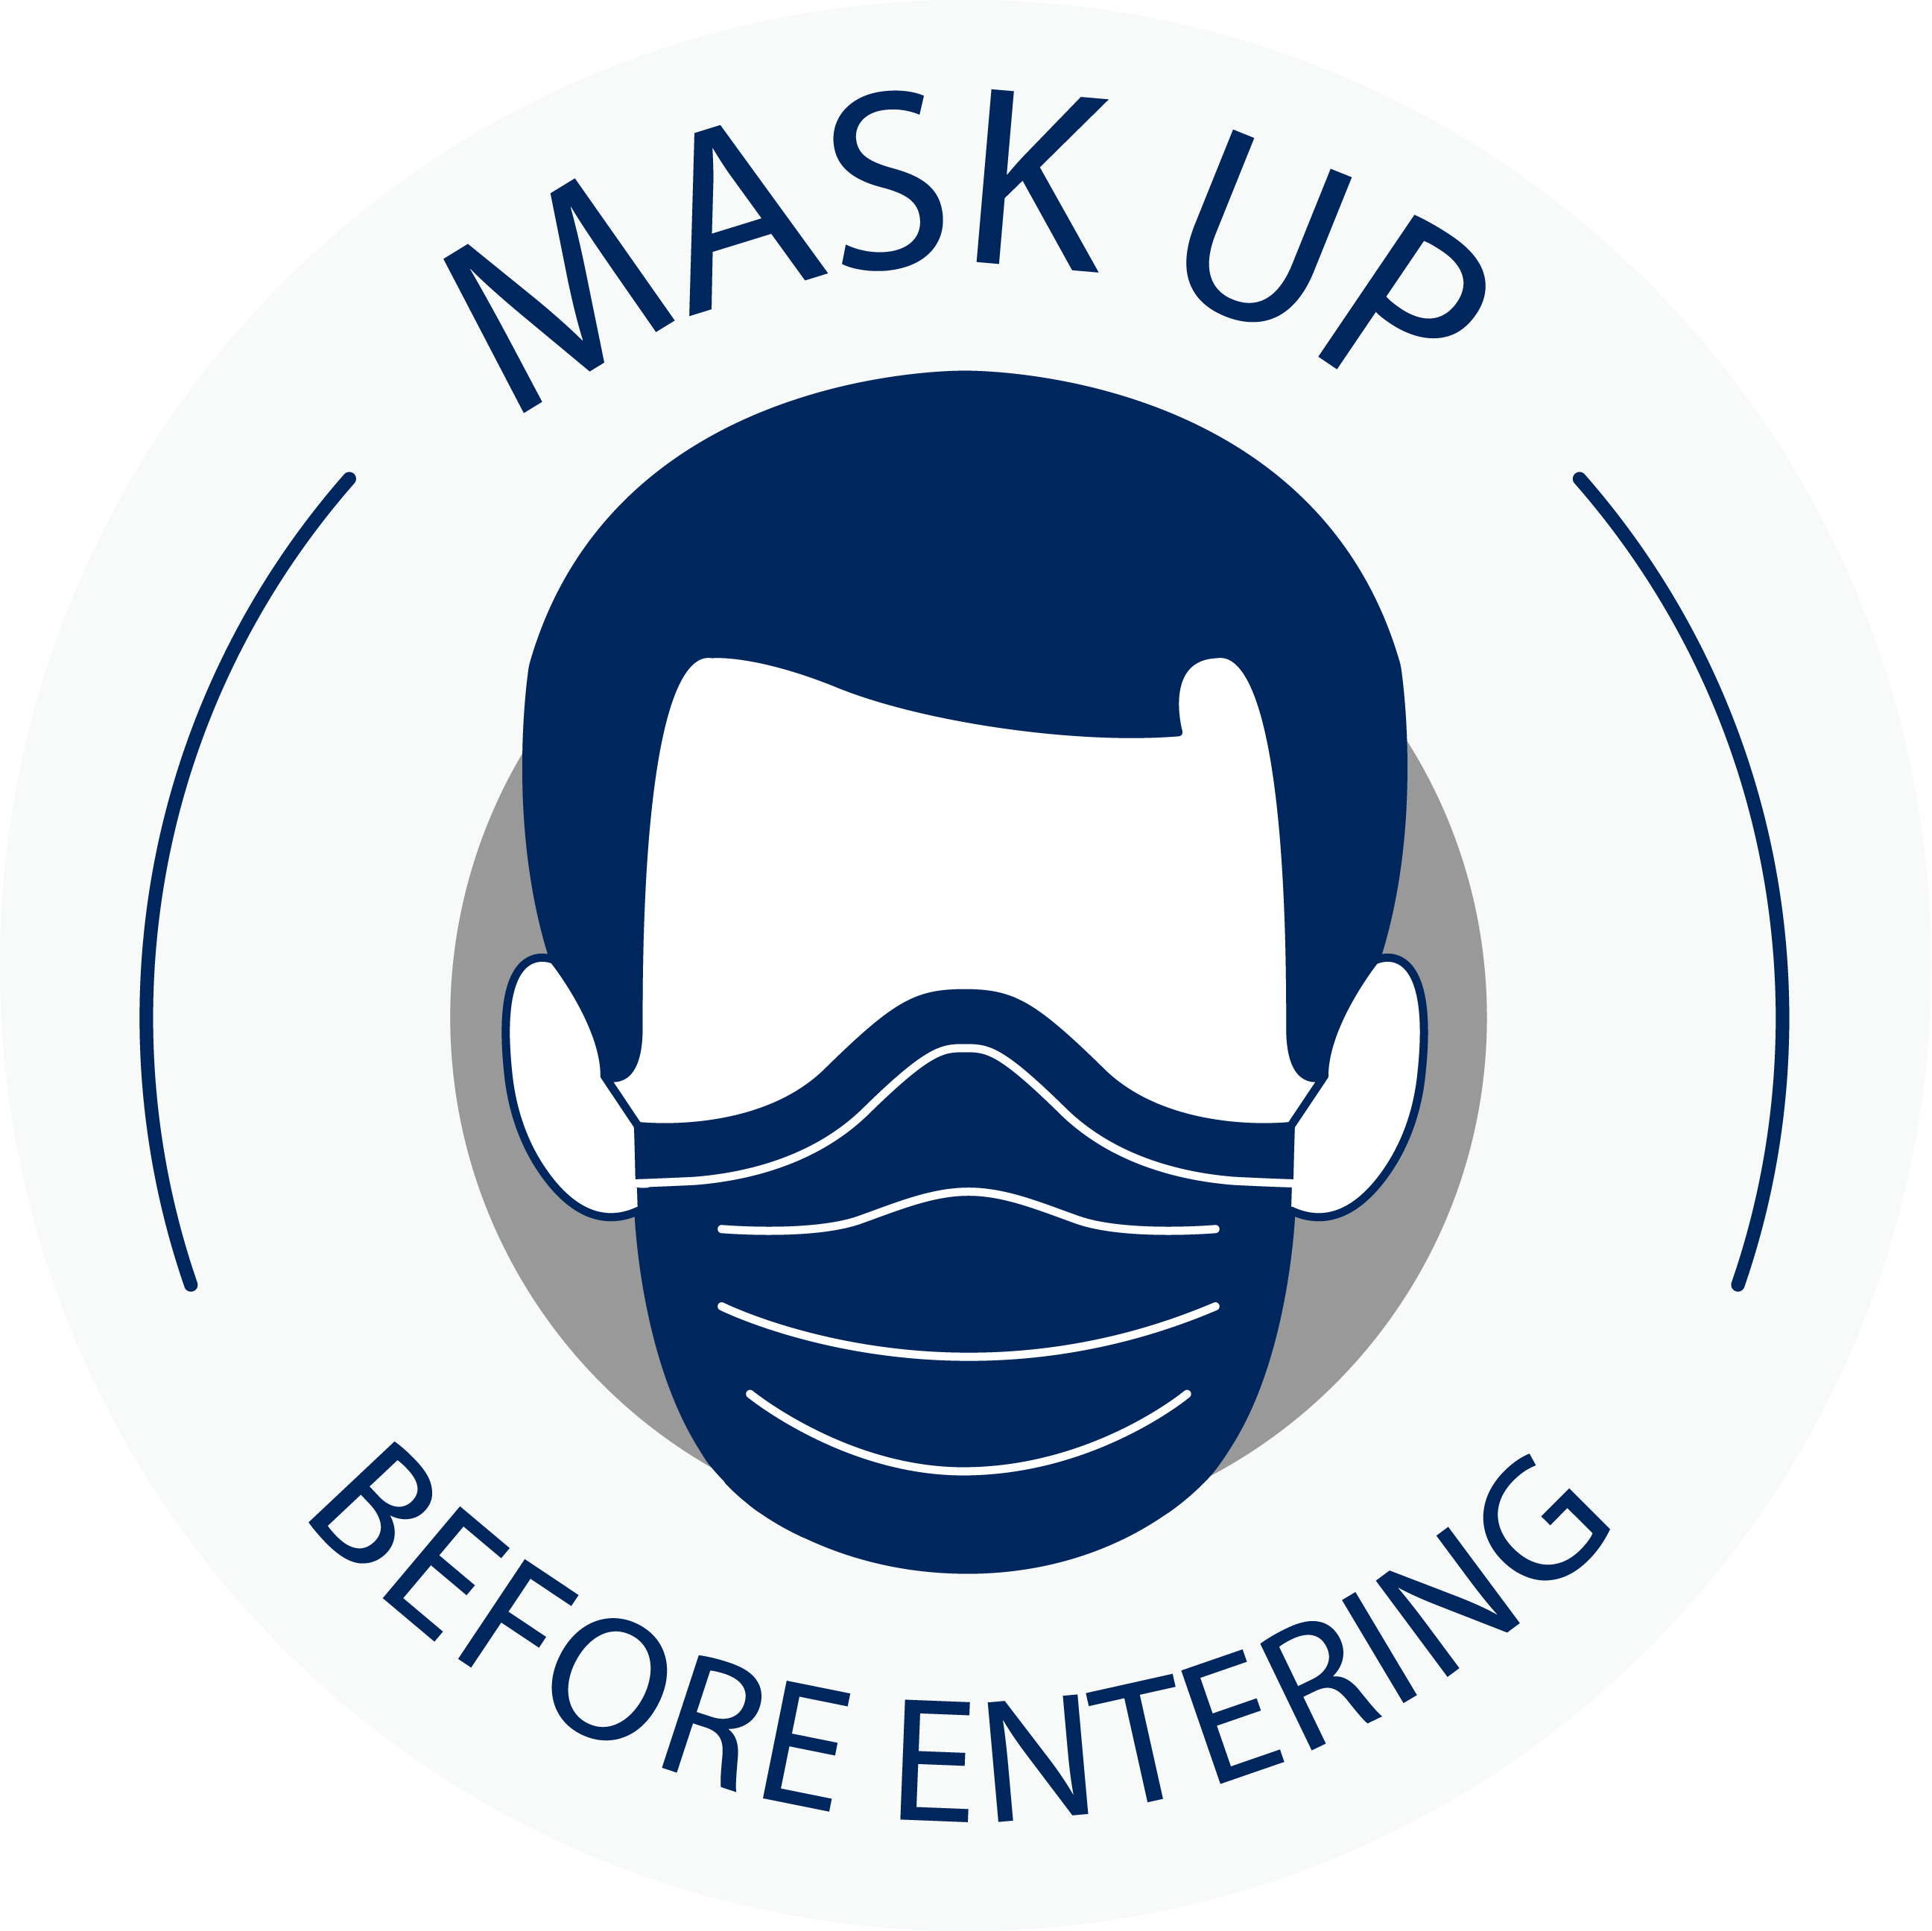 Mask up before entering